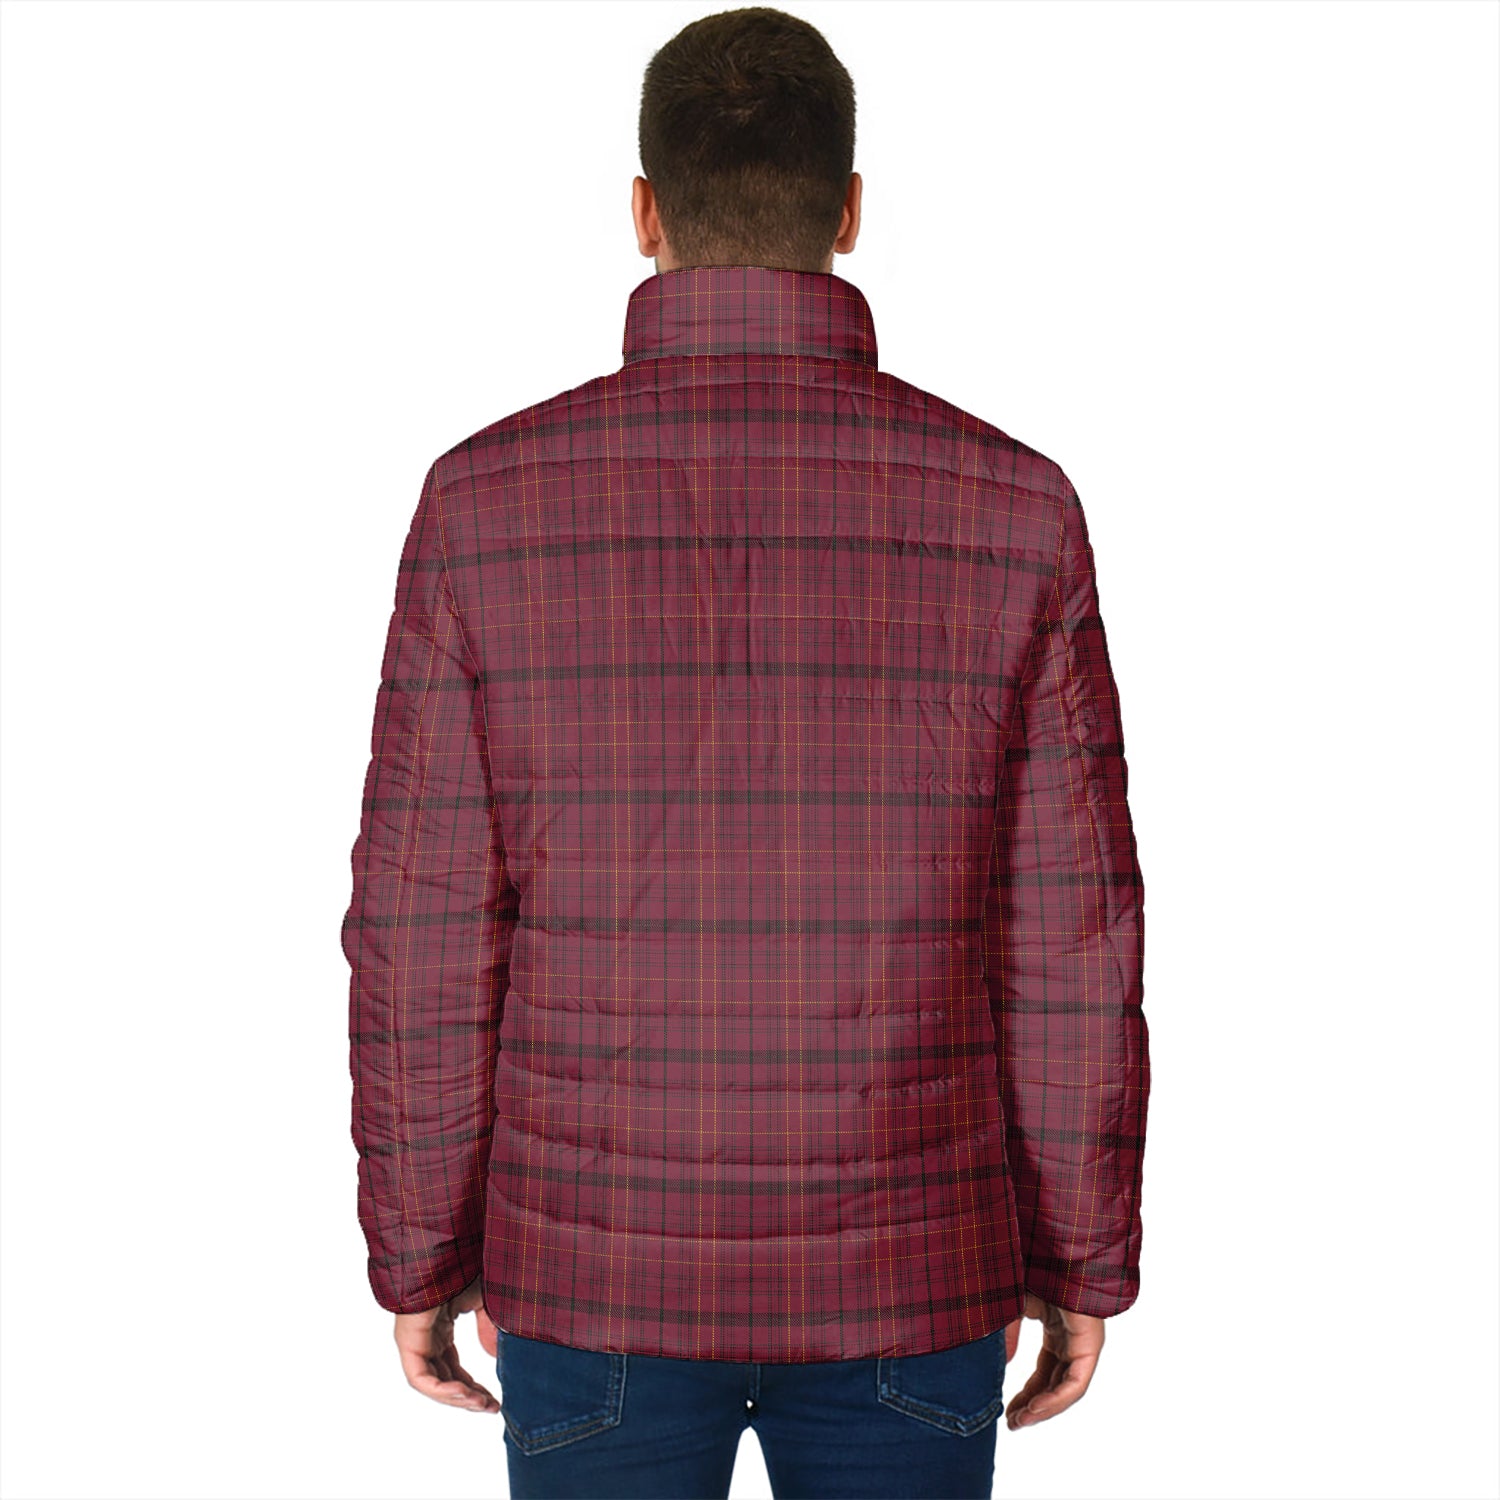 williams-of-wales-tartan-padded-jacket